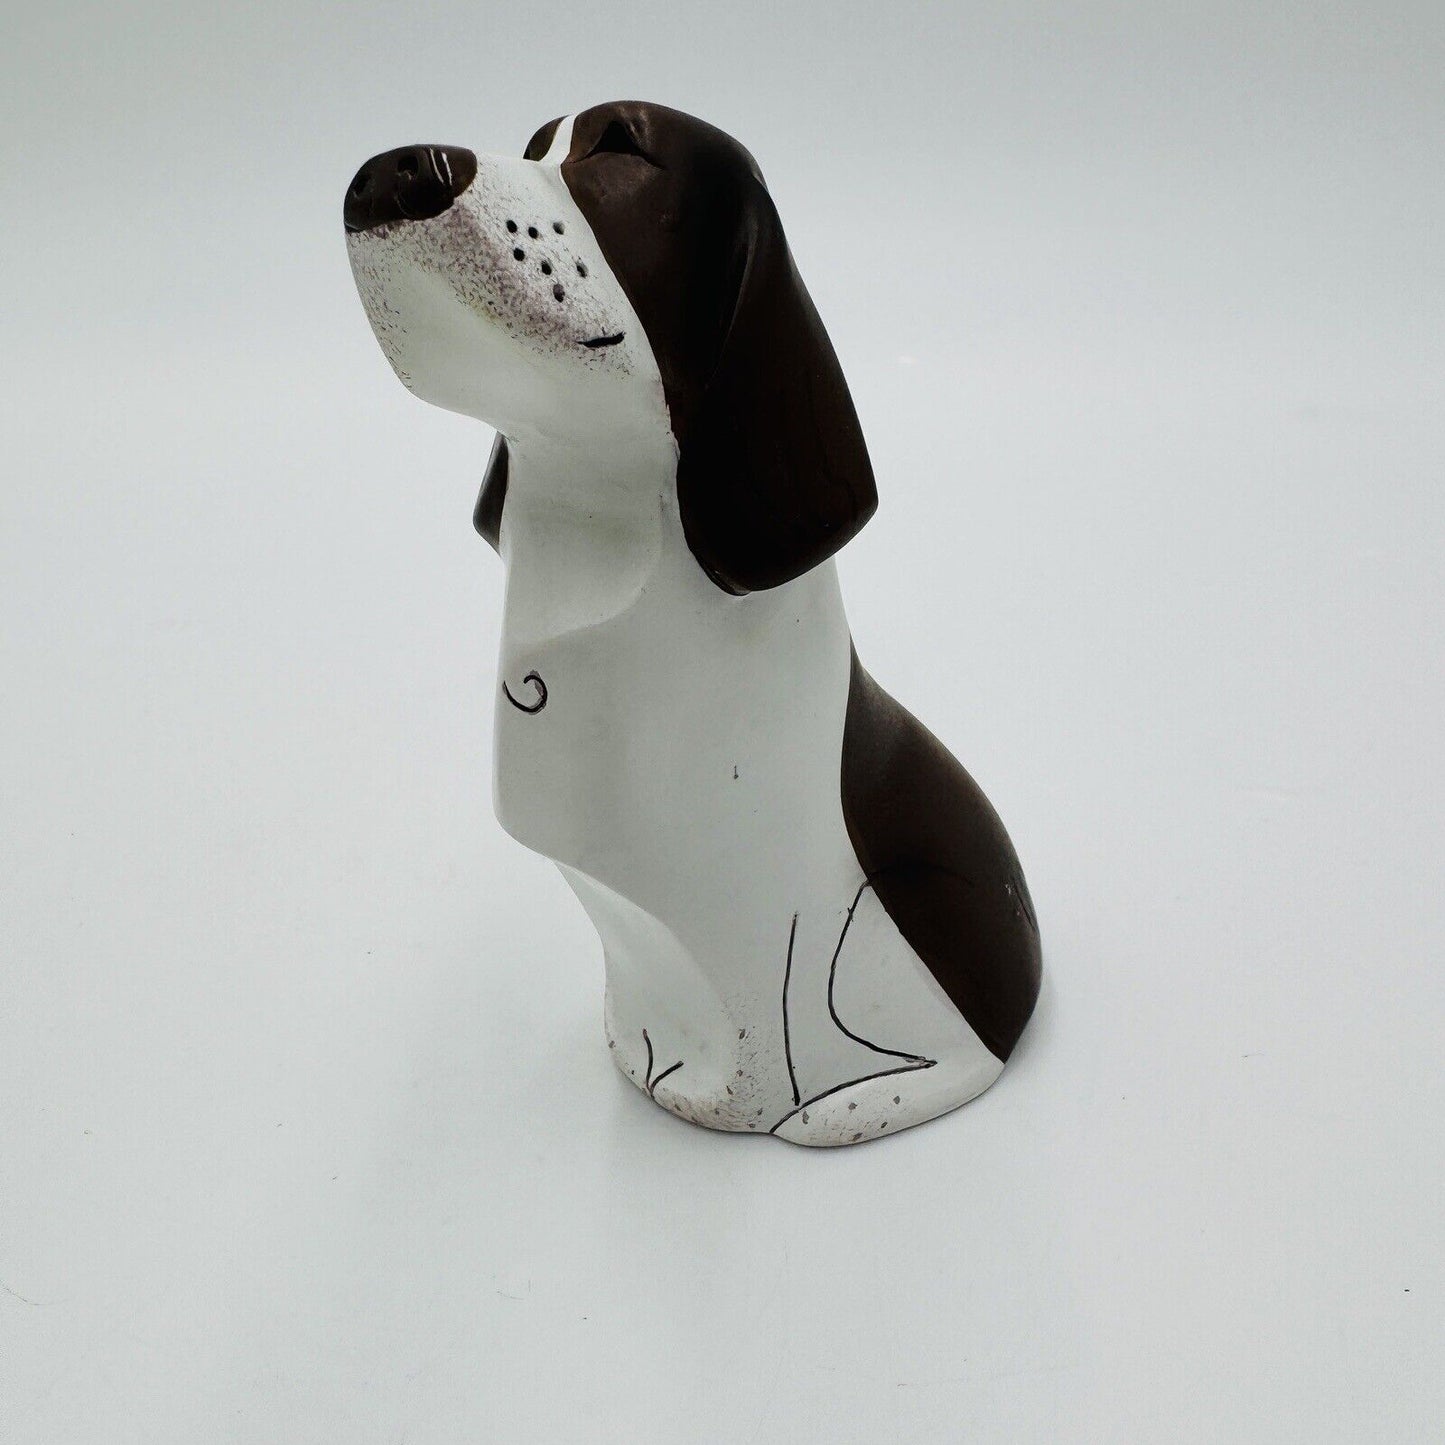 Pedigree Pals Springer Spaniel Arora Design 2012 Dean Kendricks Dog Figurine